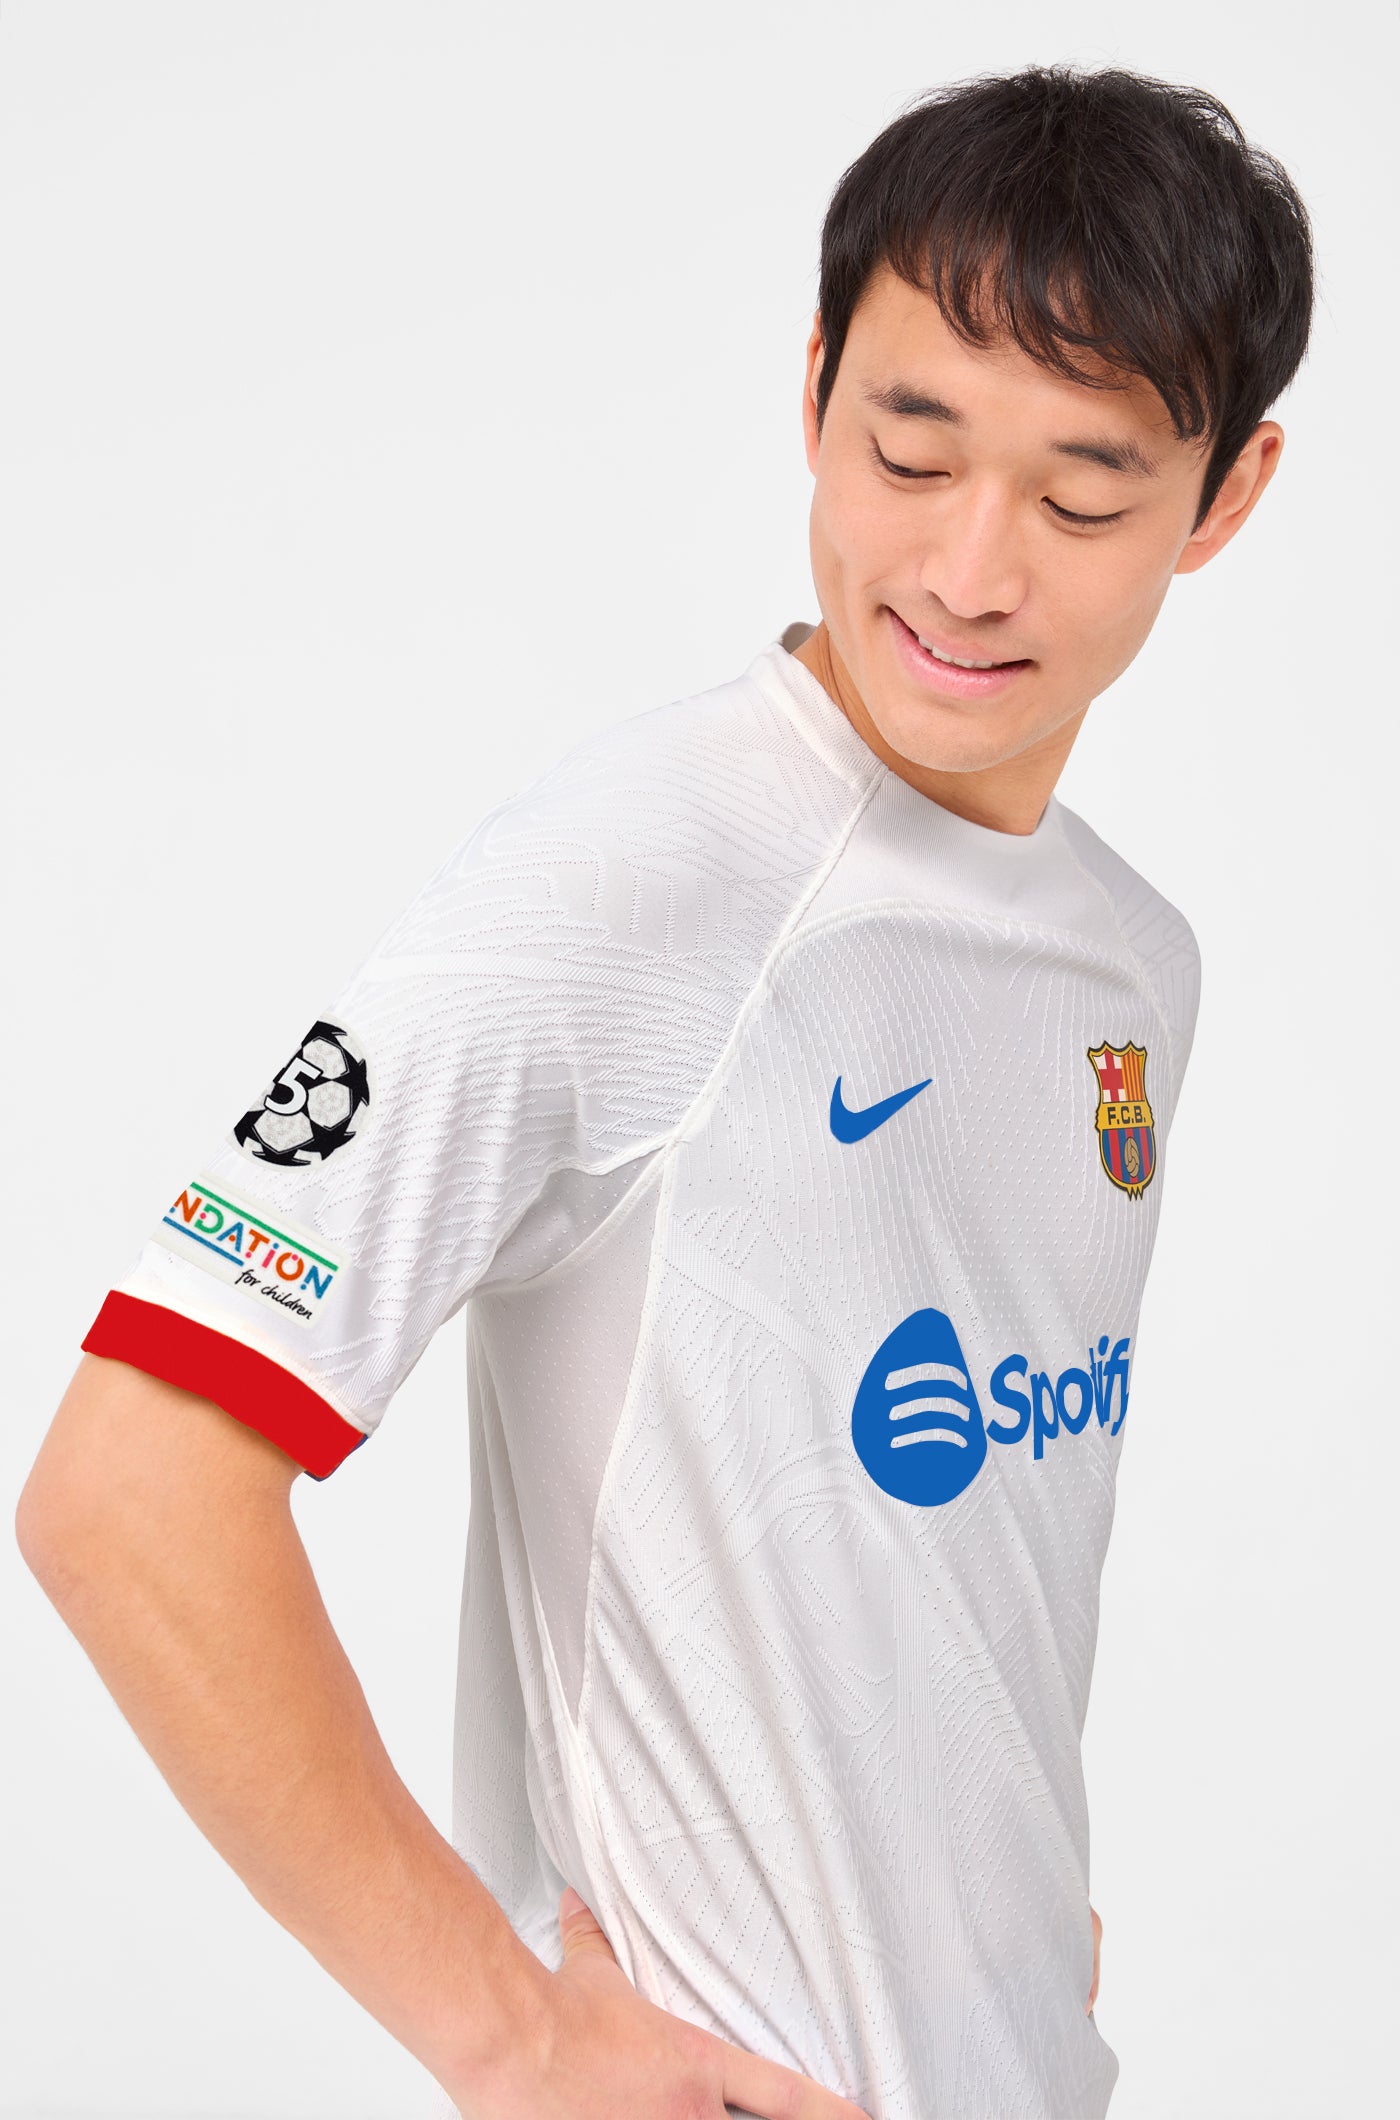 UCL FC Barcelona away shirt 23/24 Player’s Edition - I. MARTÍNEZ